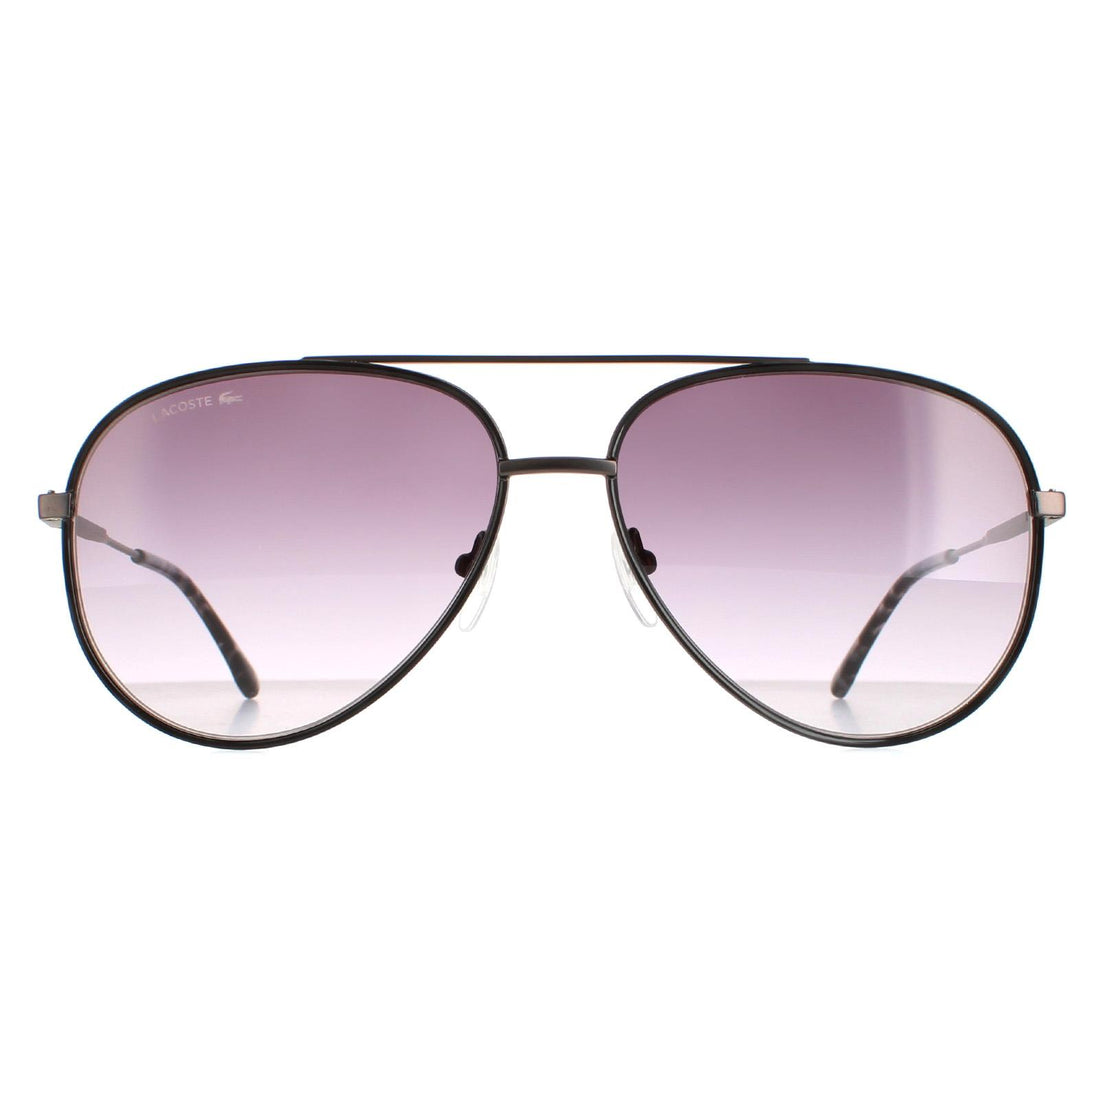 Lacoste Sunglasses L247S 021 Matte Dark Grey Grey Gradient